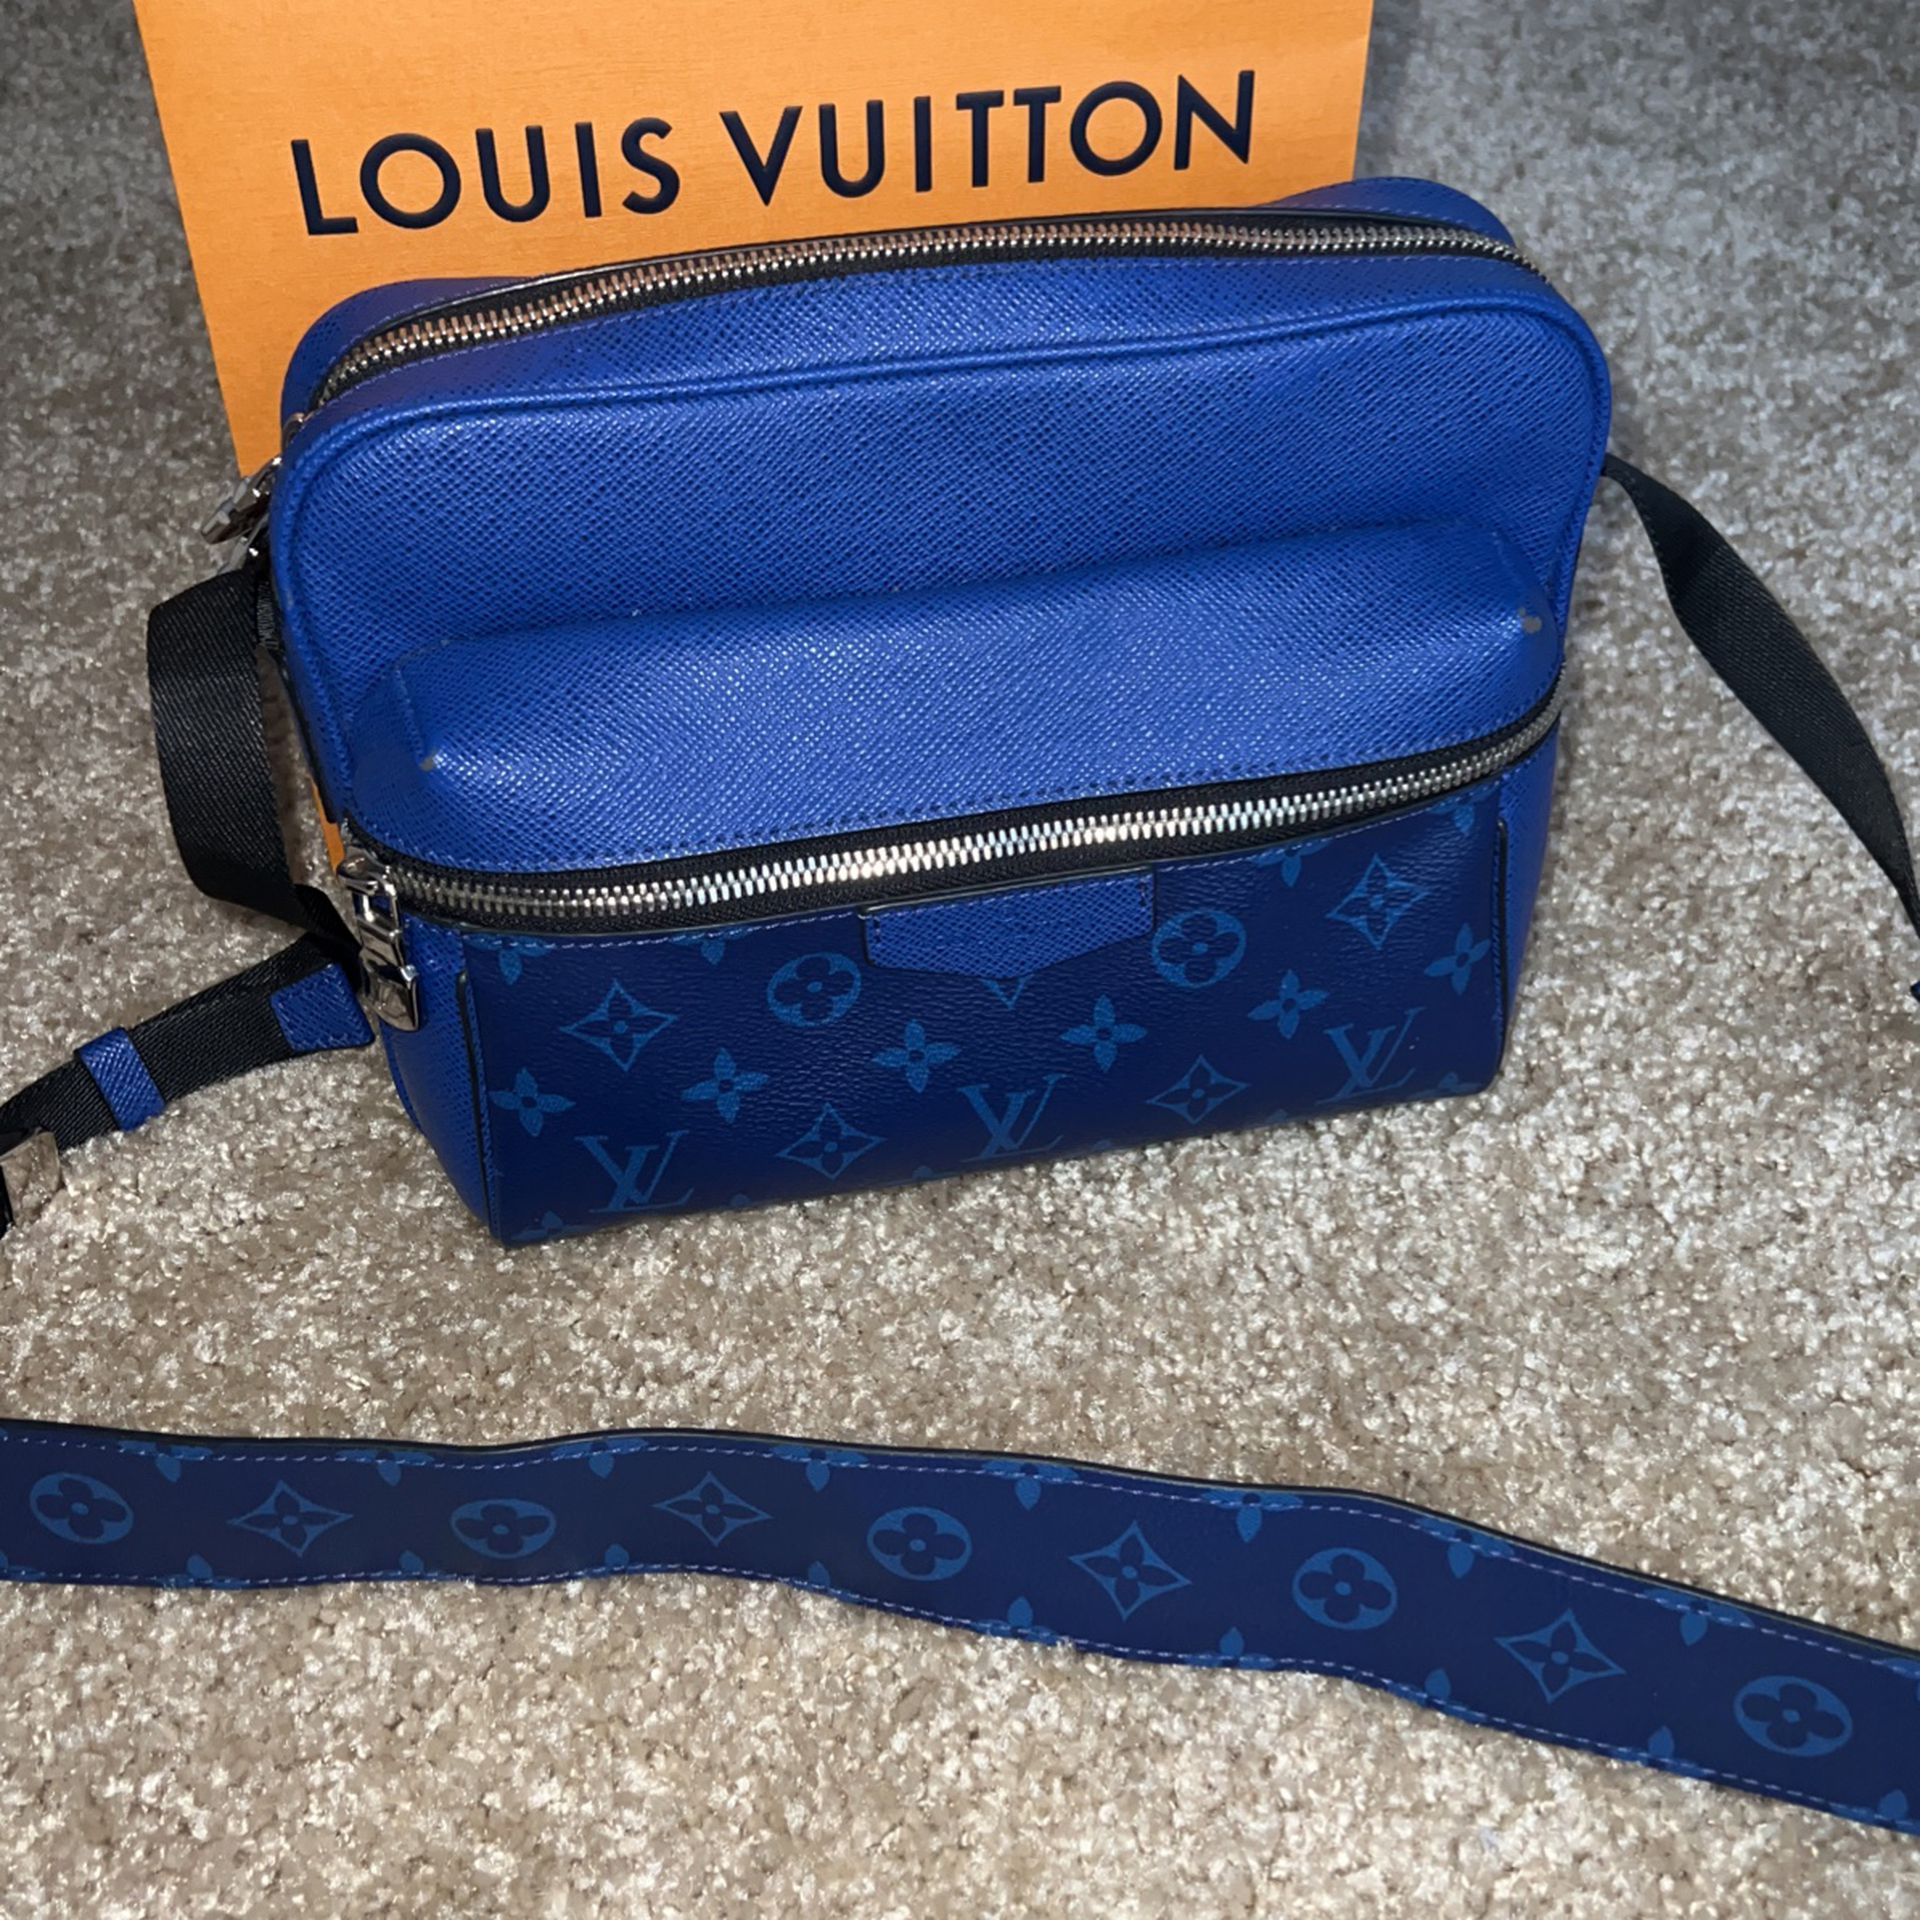 LV, Louis Vuitton men bag